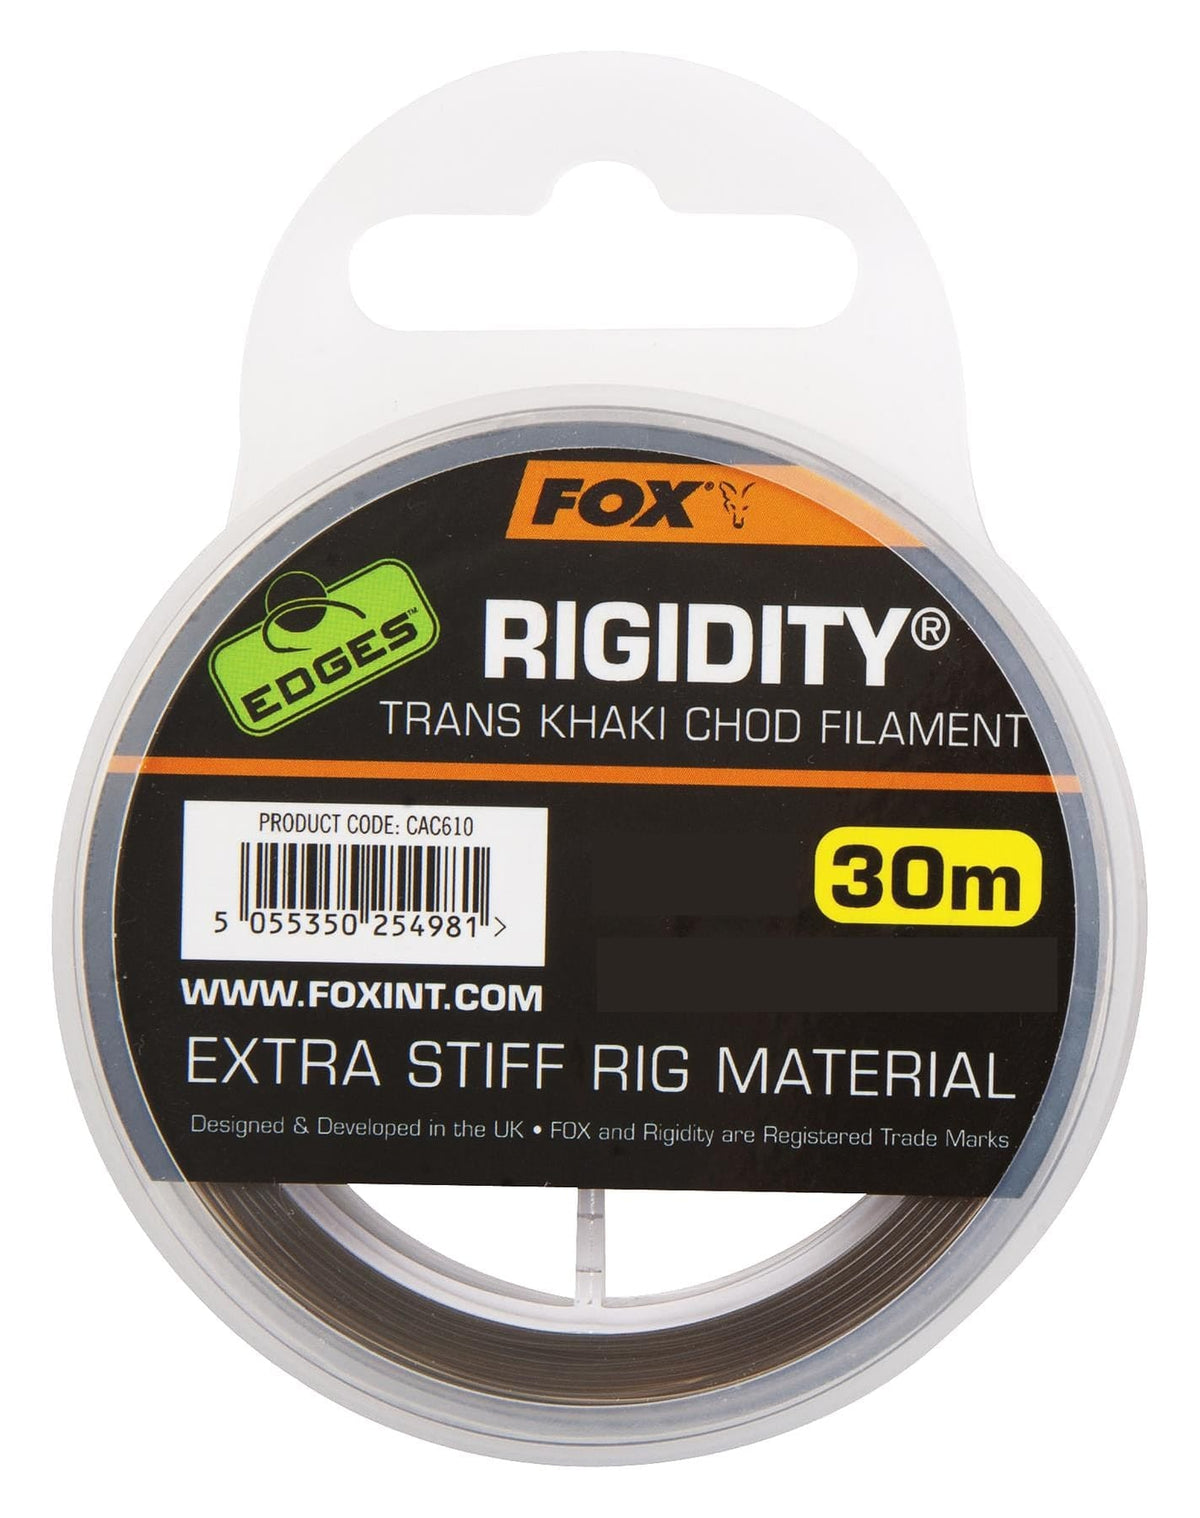 FOX Edges Rigidity Chod Filament - Extra Stiff - 30m Trans Khaki.